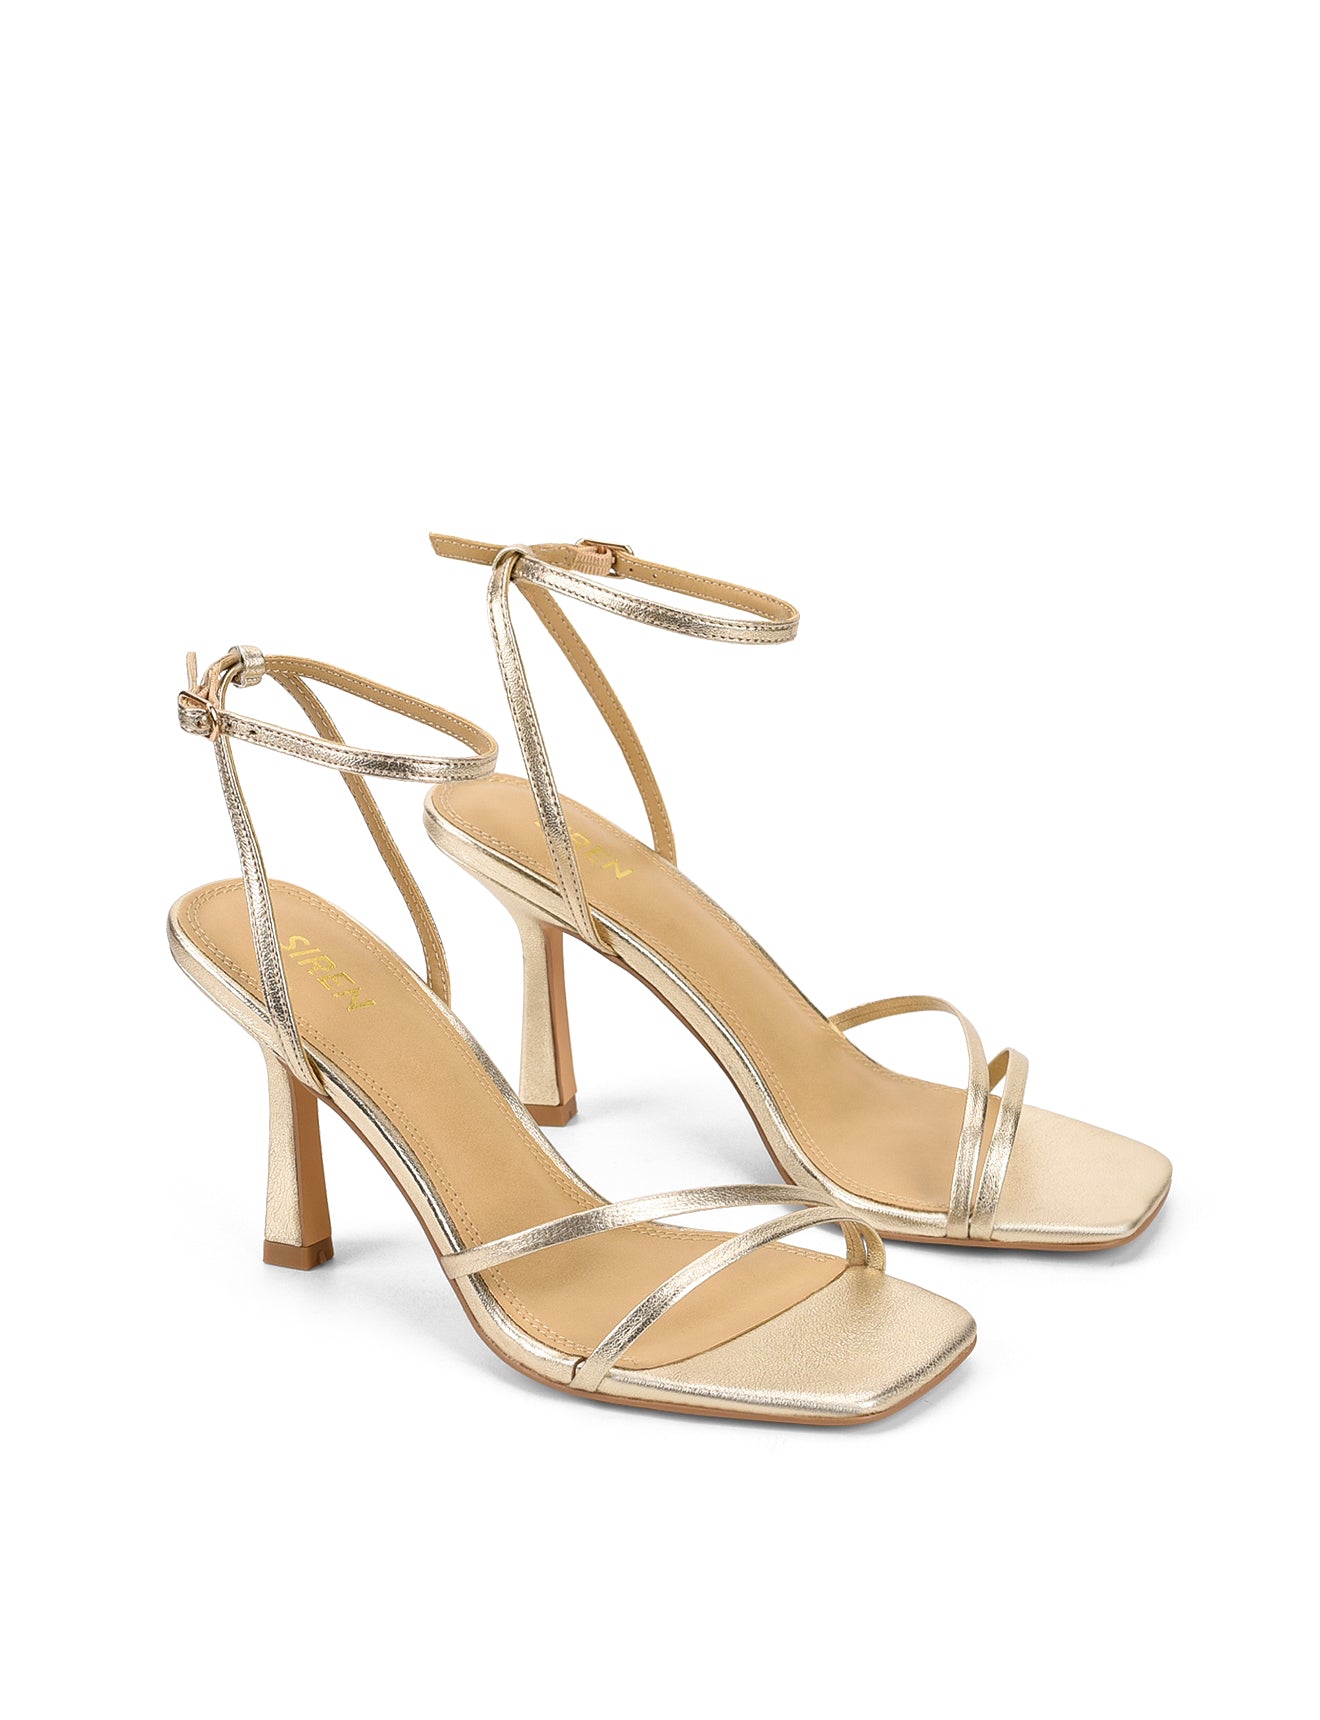 Women's high heel stiletto sandal in gold metallic leather